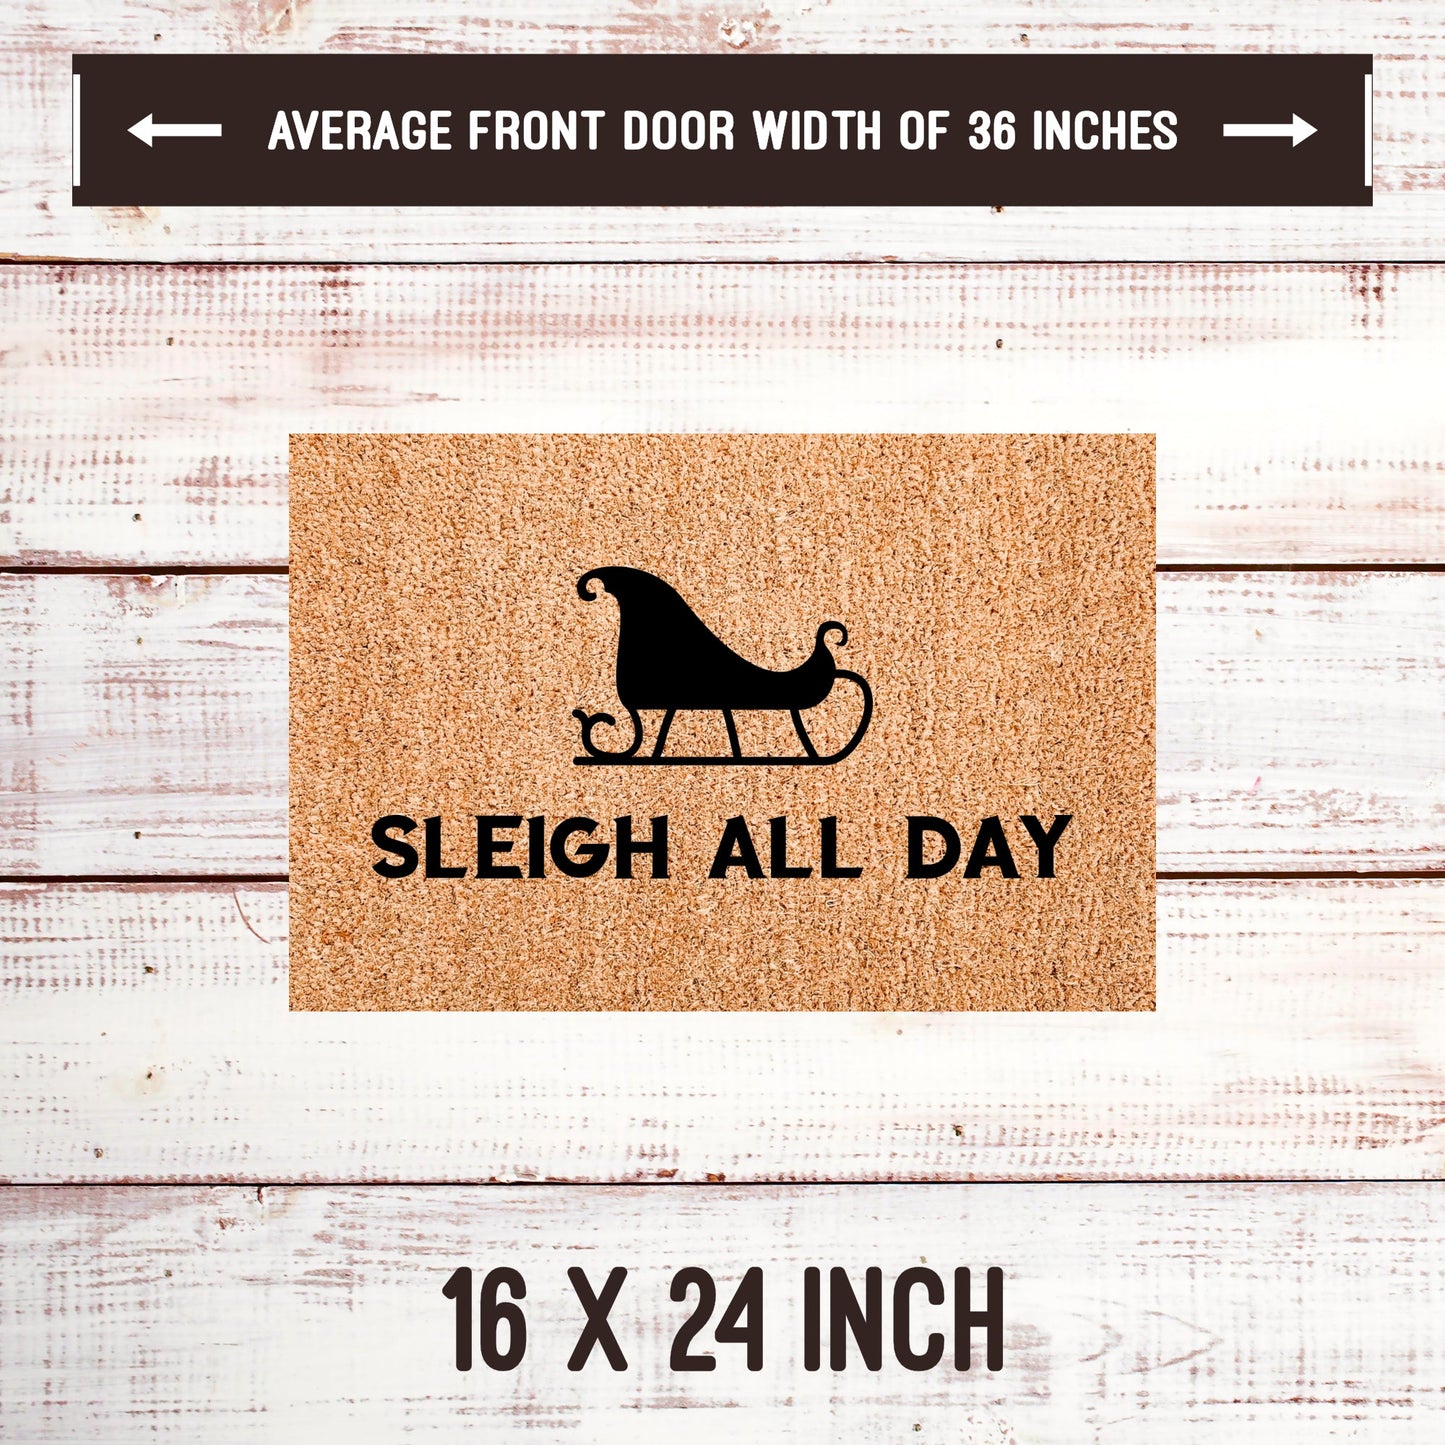 Sleigh All Day Door Mats teelaunch 16x24 Inches 